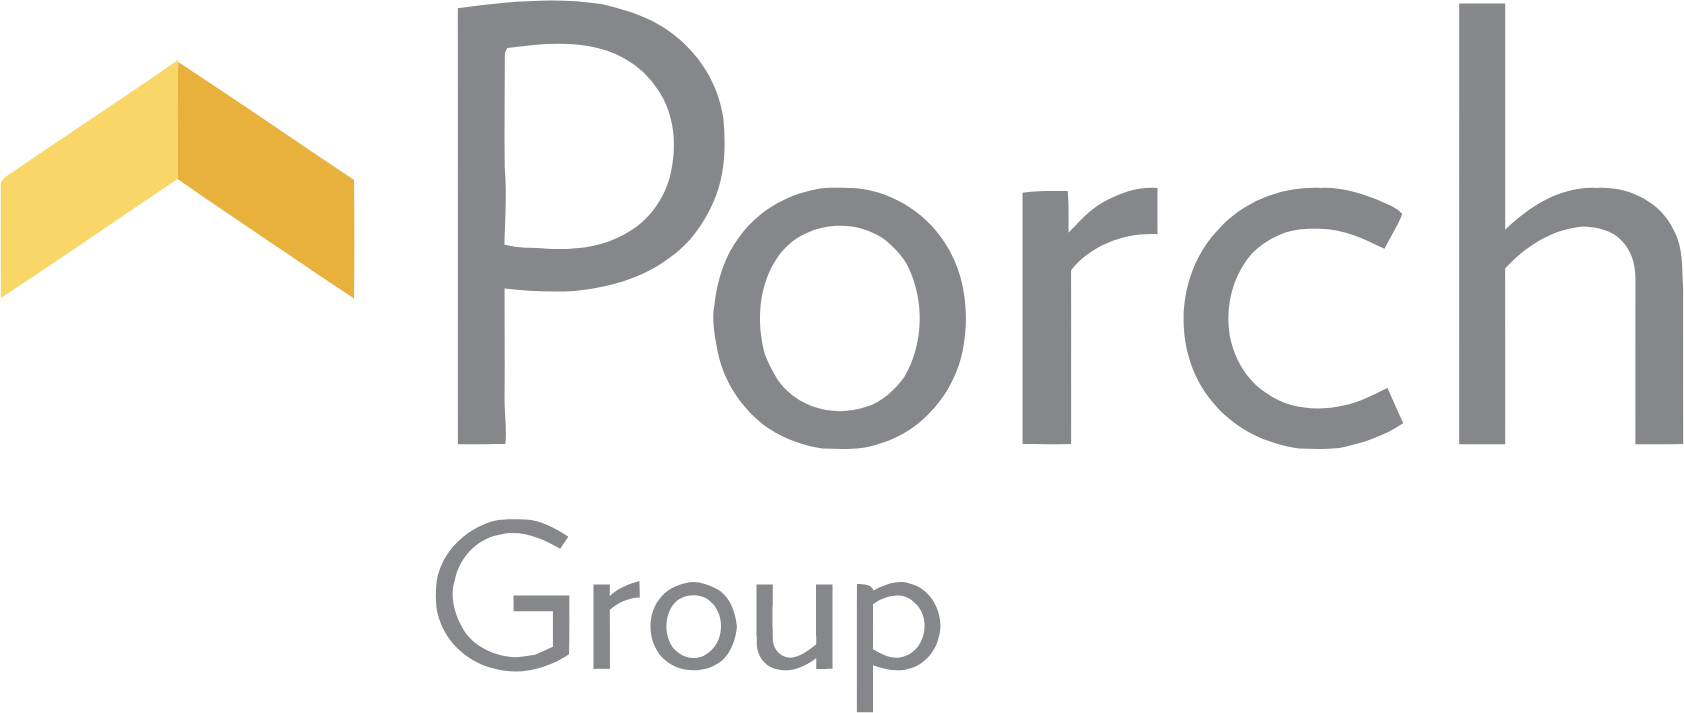 Porch Group logo large (transparent PNG)